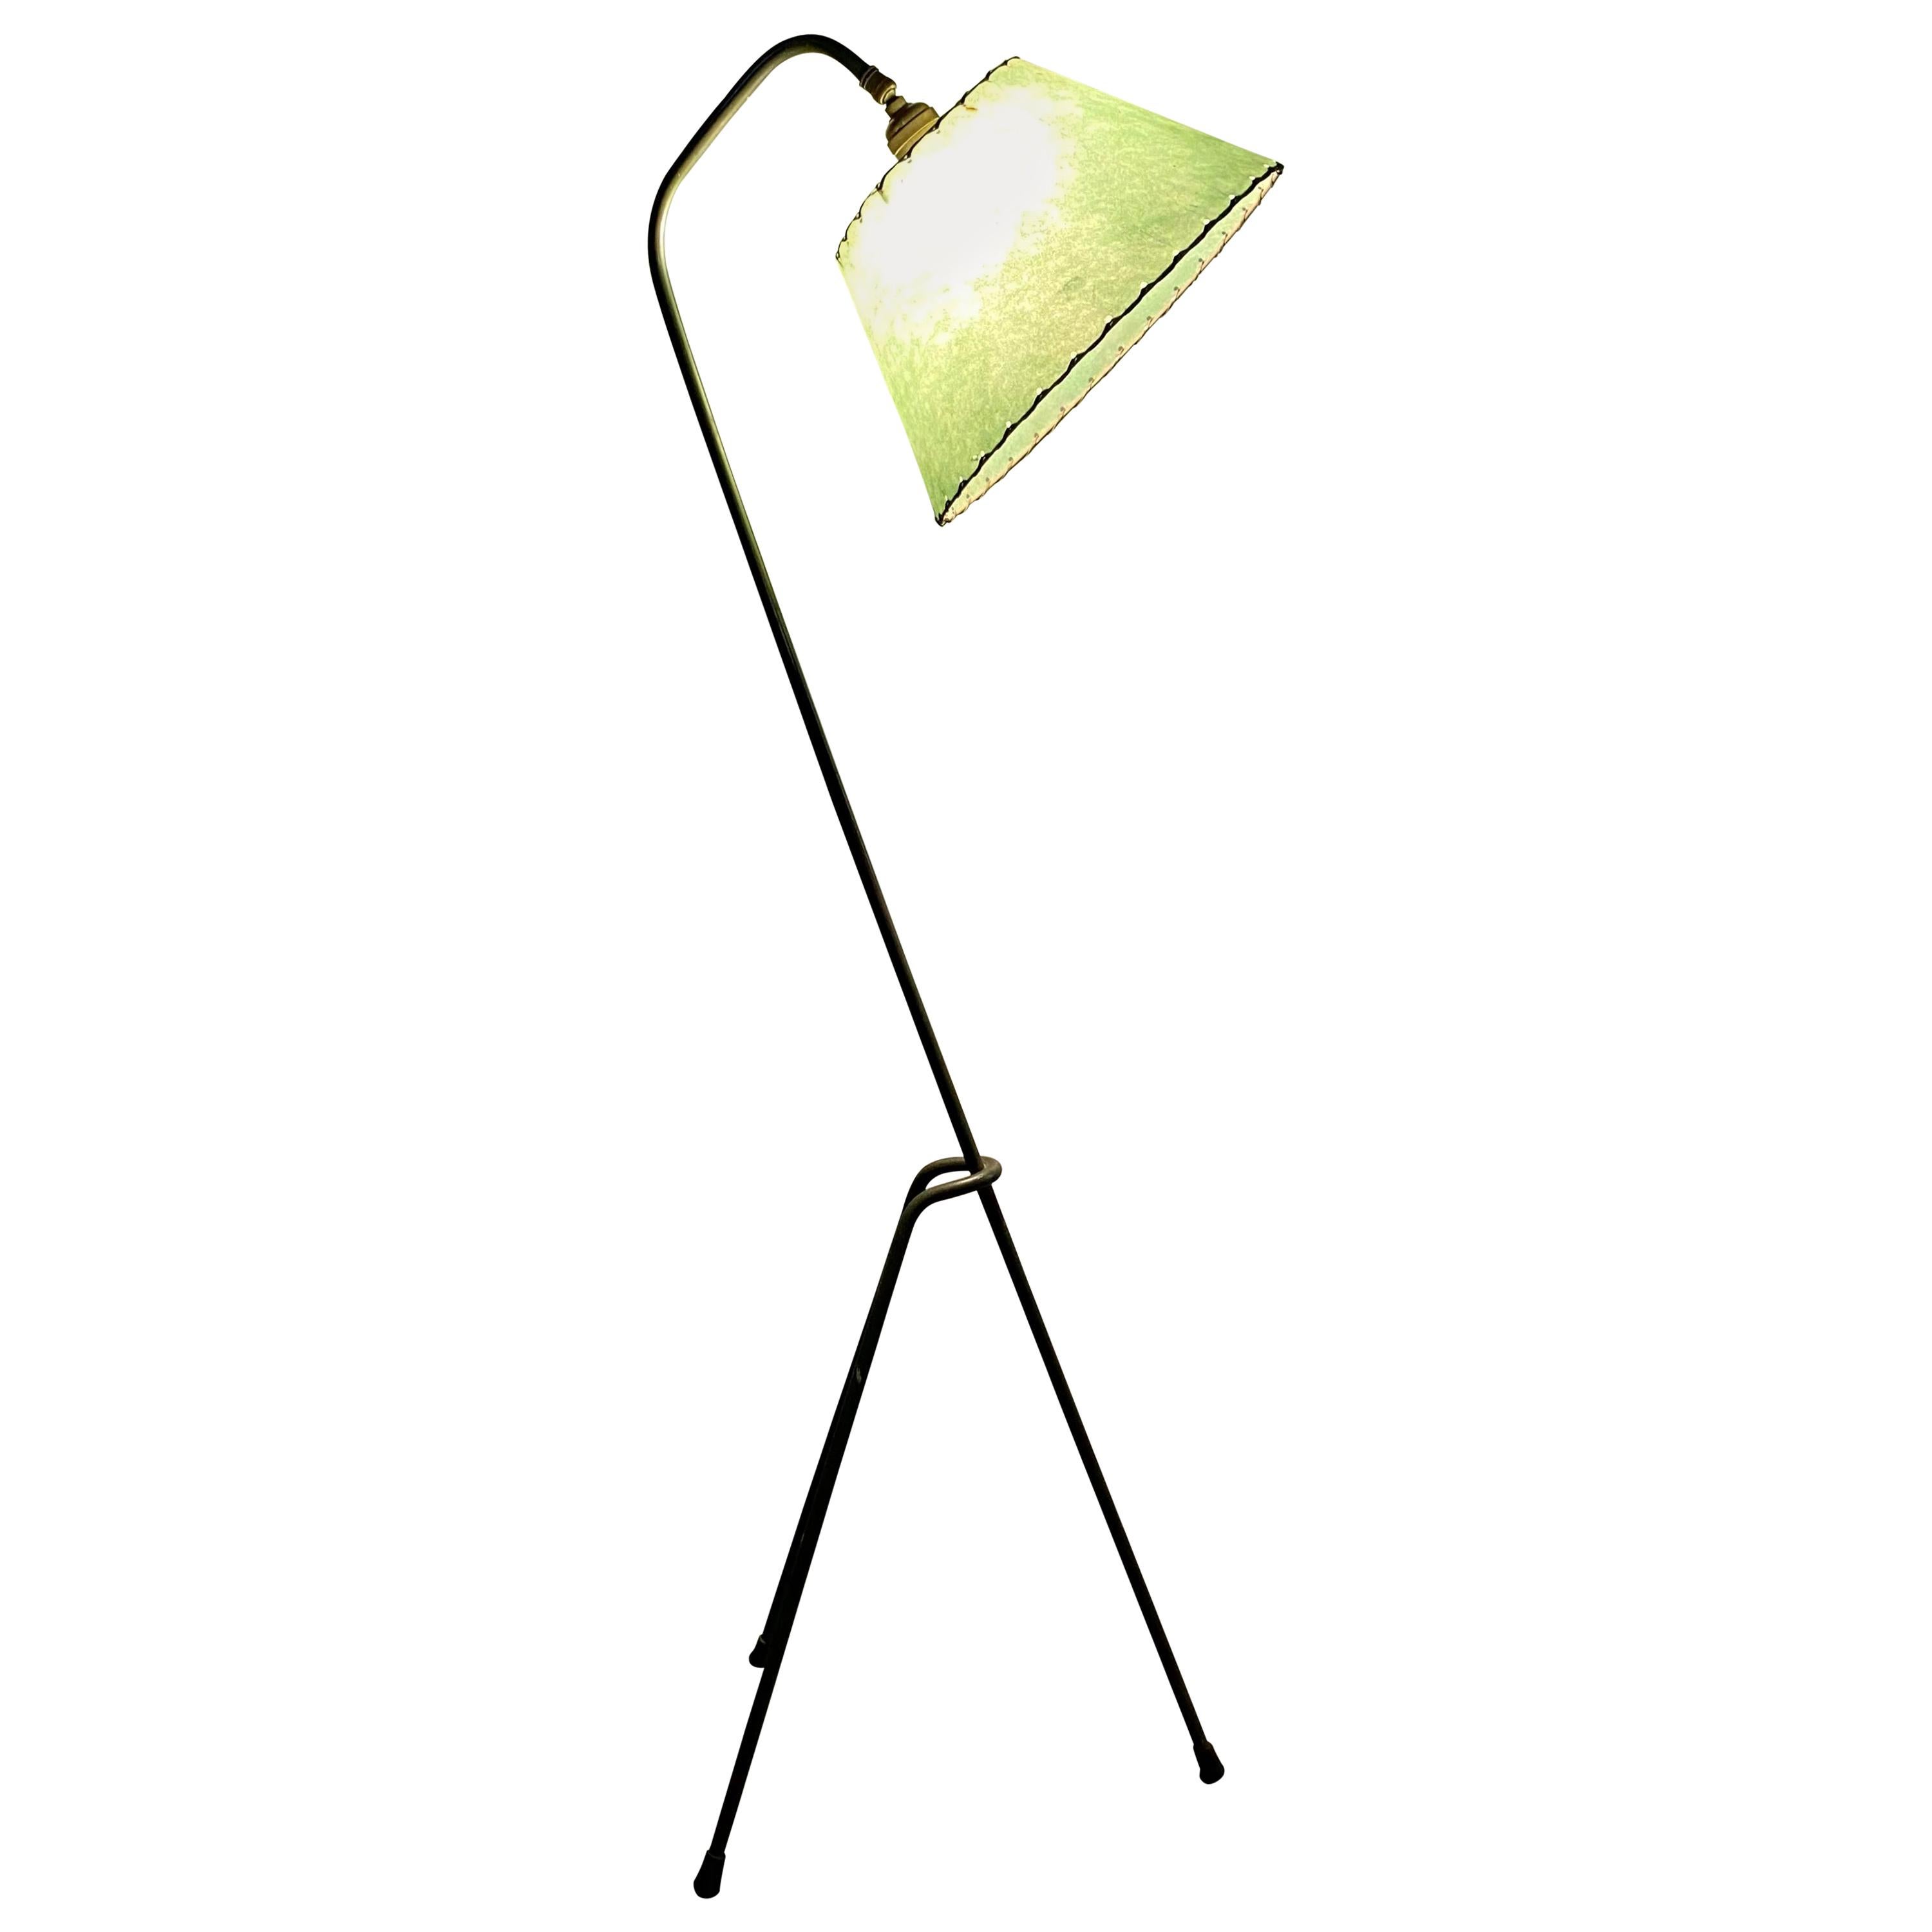 Classic Mid-Century Modern Floor Lamp "Grasshopper" Manner of Greta Grossman 